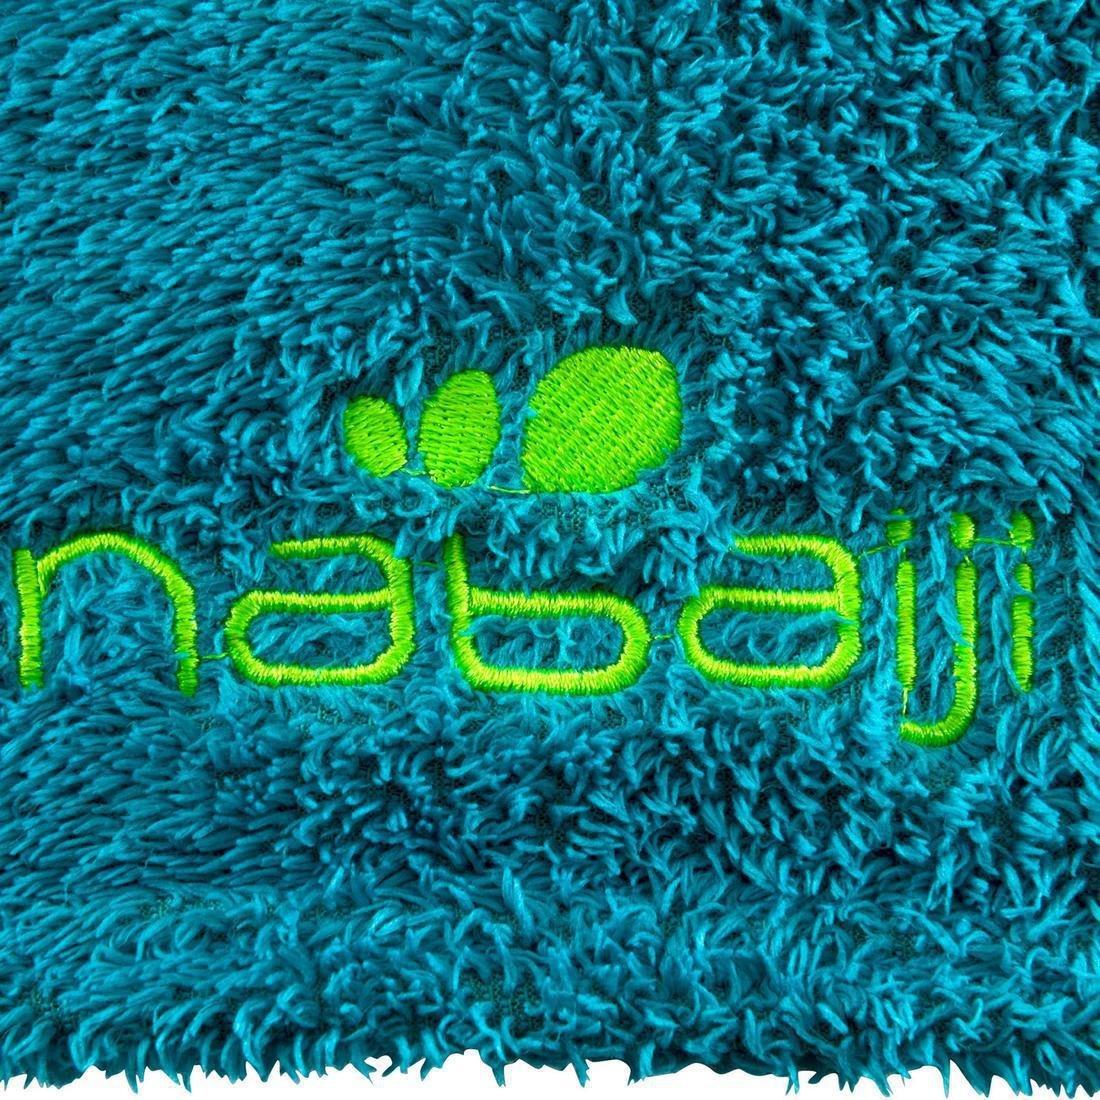 NABAIJI - Swimming Ultra-Soft Microfibre Towel, Blue